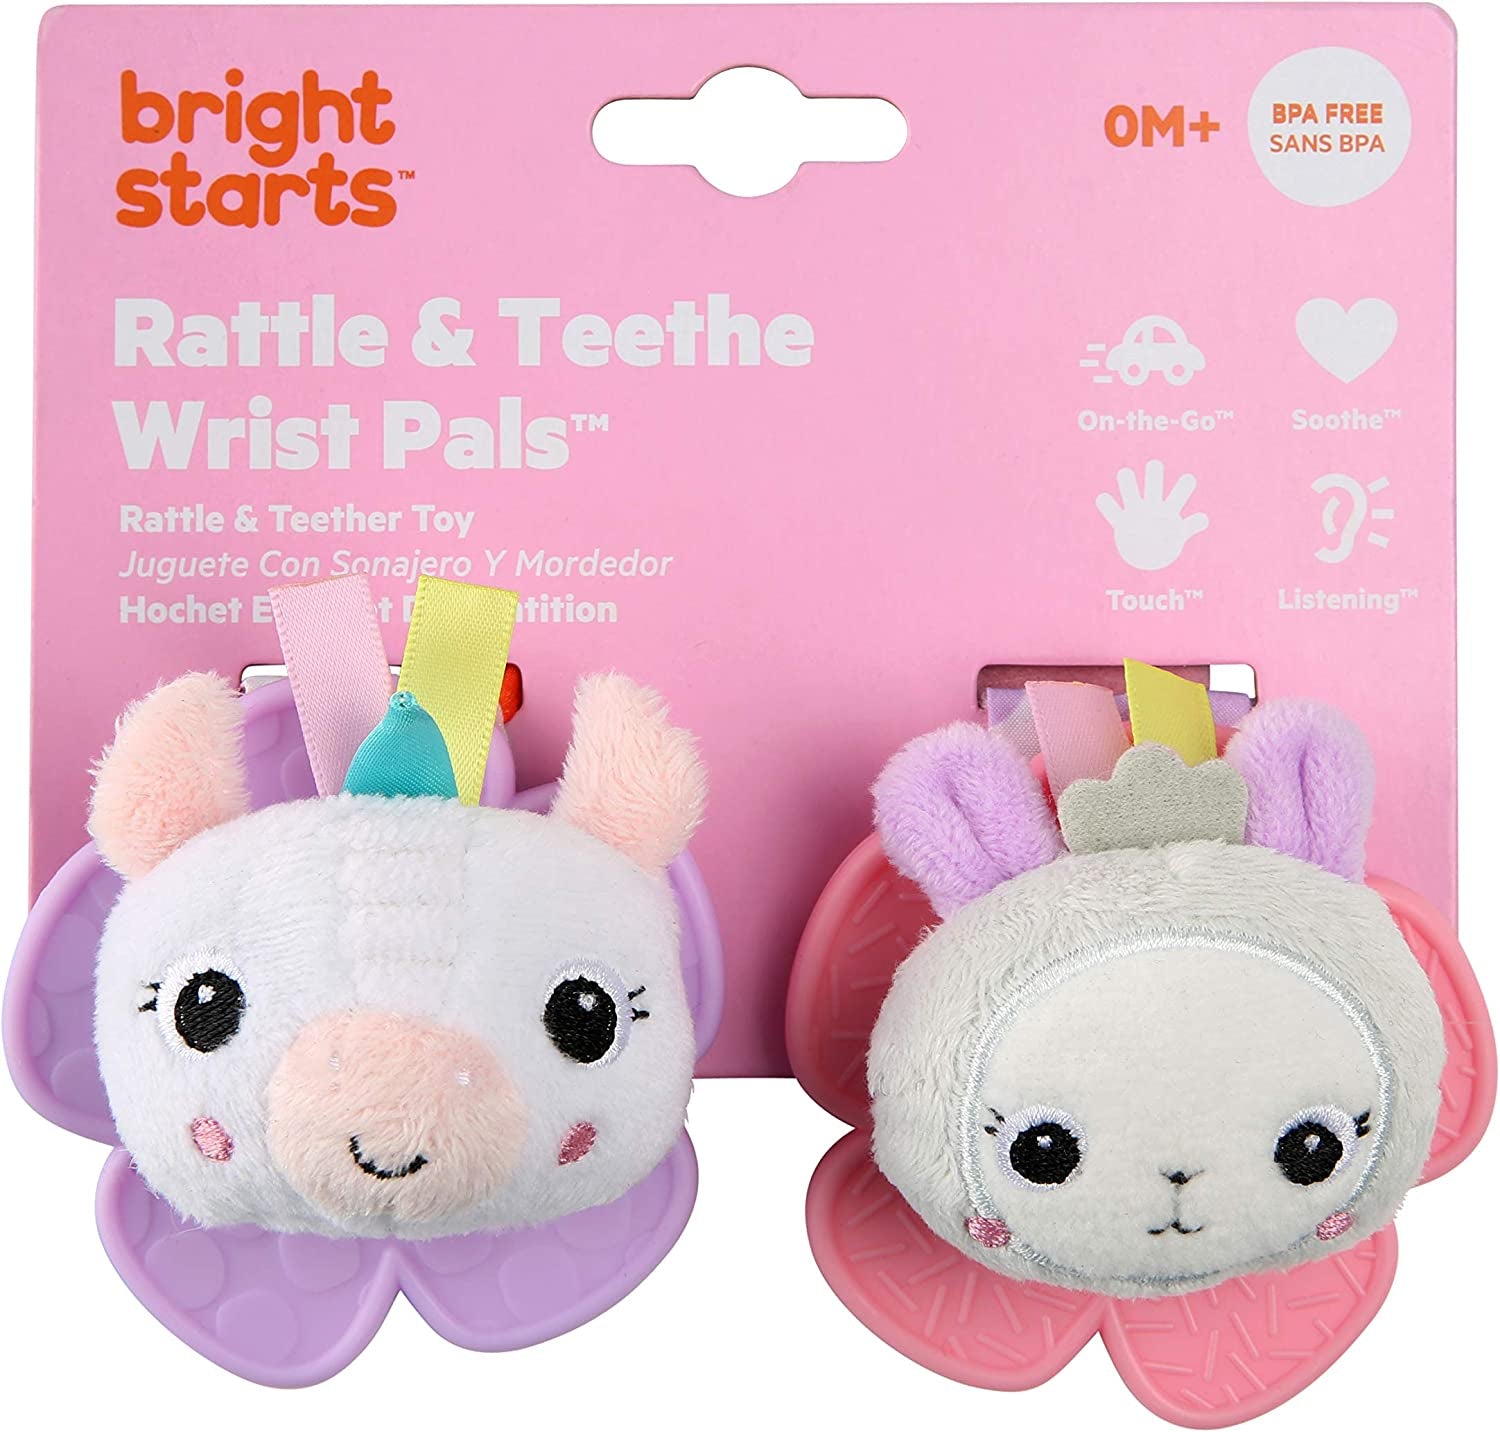 Bright Starts Rattle & Teethe Wrist Pals Toy - Set of Two, Unicorn & Llama